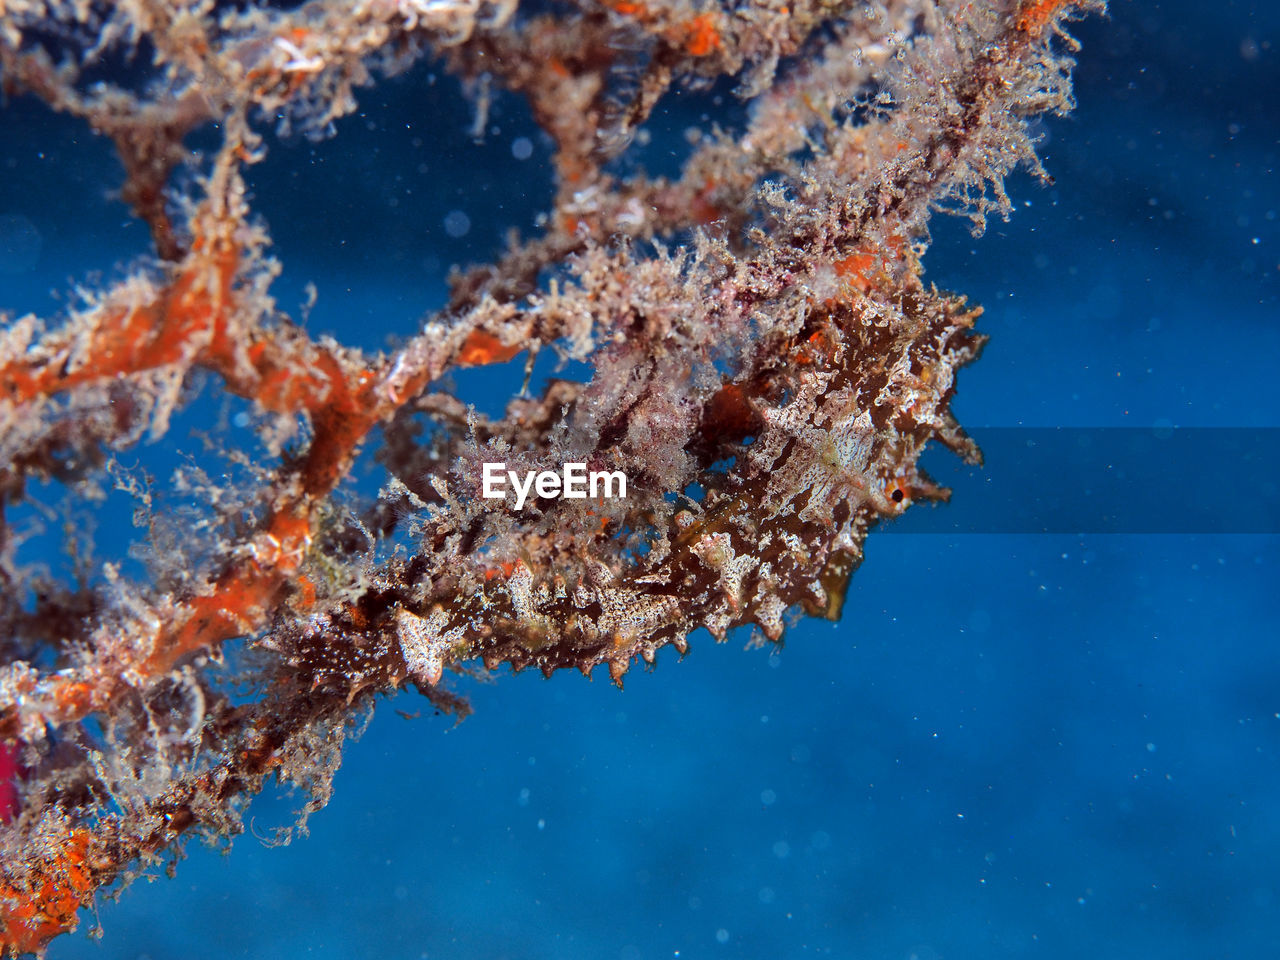 Close-up of a sea horse in a net